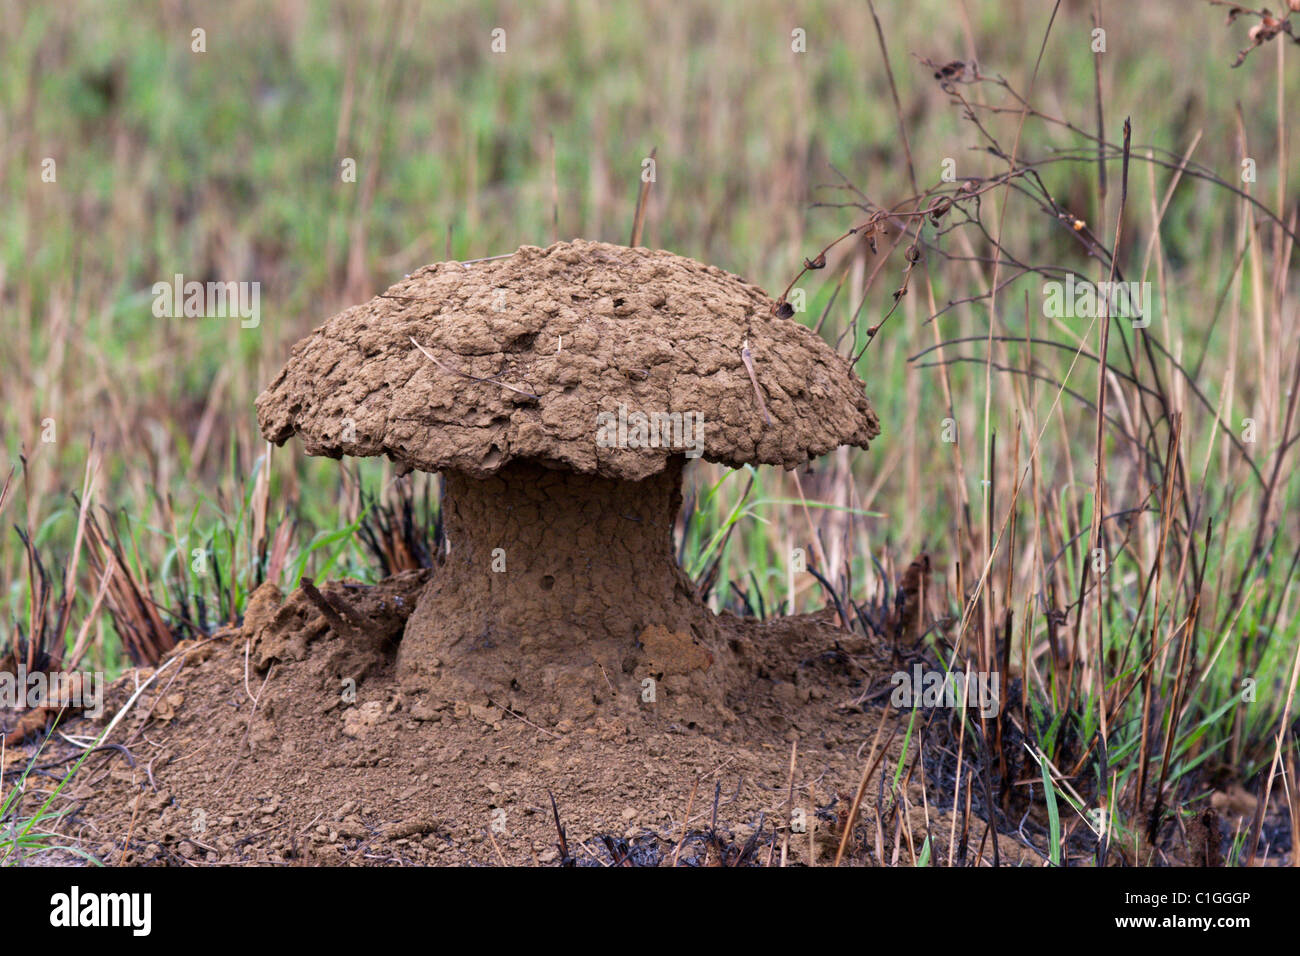 termite mound mushroom shape Gabon Africa Stock Photo